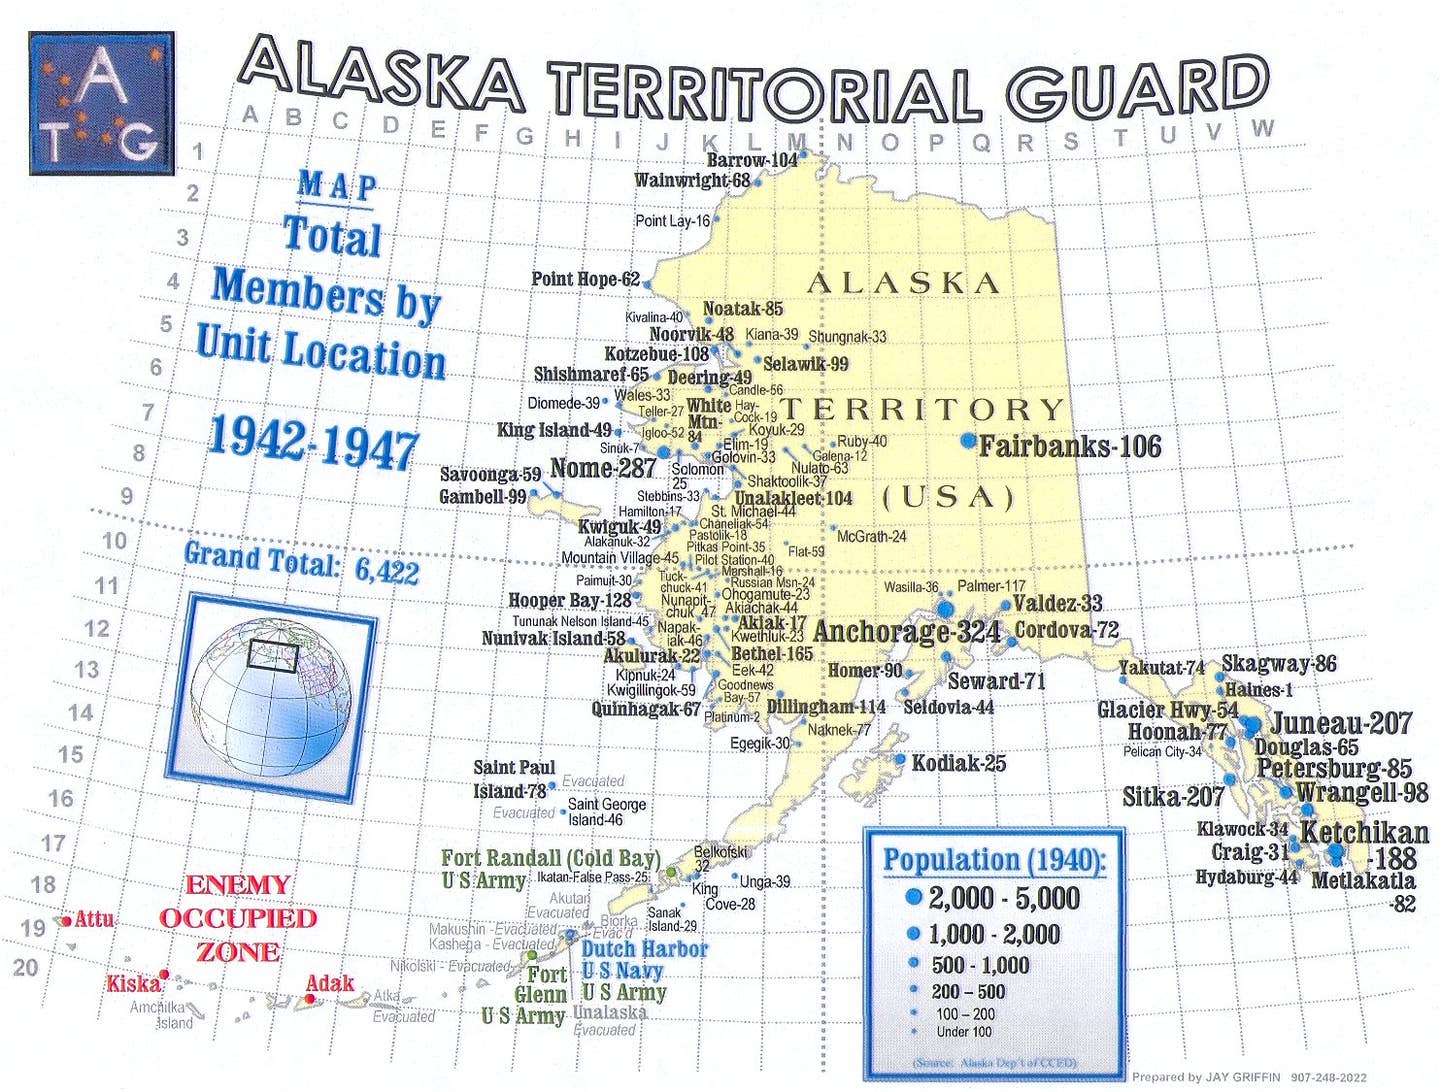 Alaska Territorial Guard map showing Alaska Territorial Guard unit locations, major military bases, and the Aleutian evacuation.